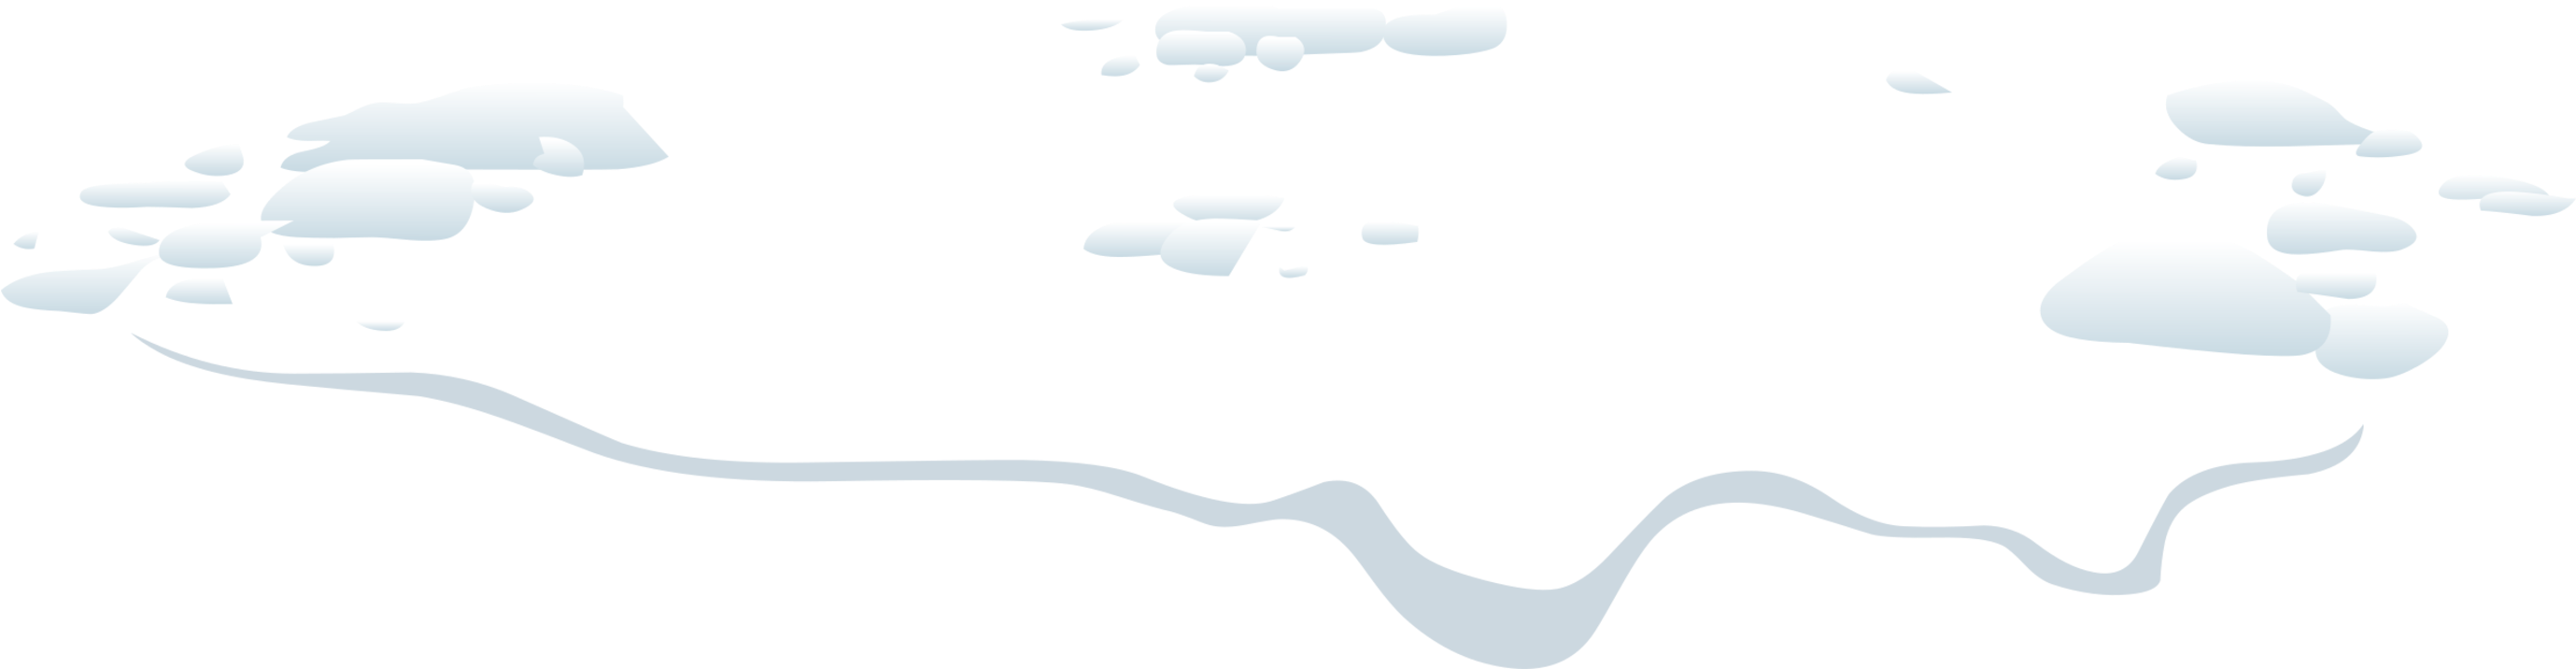 This Free Icons Png Design Of Alpine Landscape Snow - Illustration ...